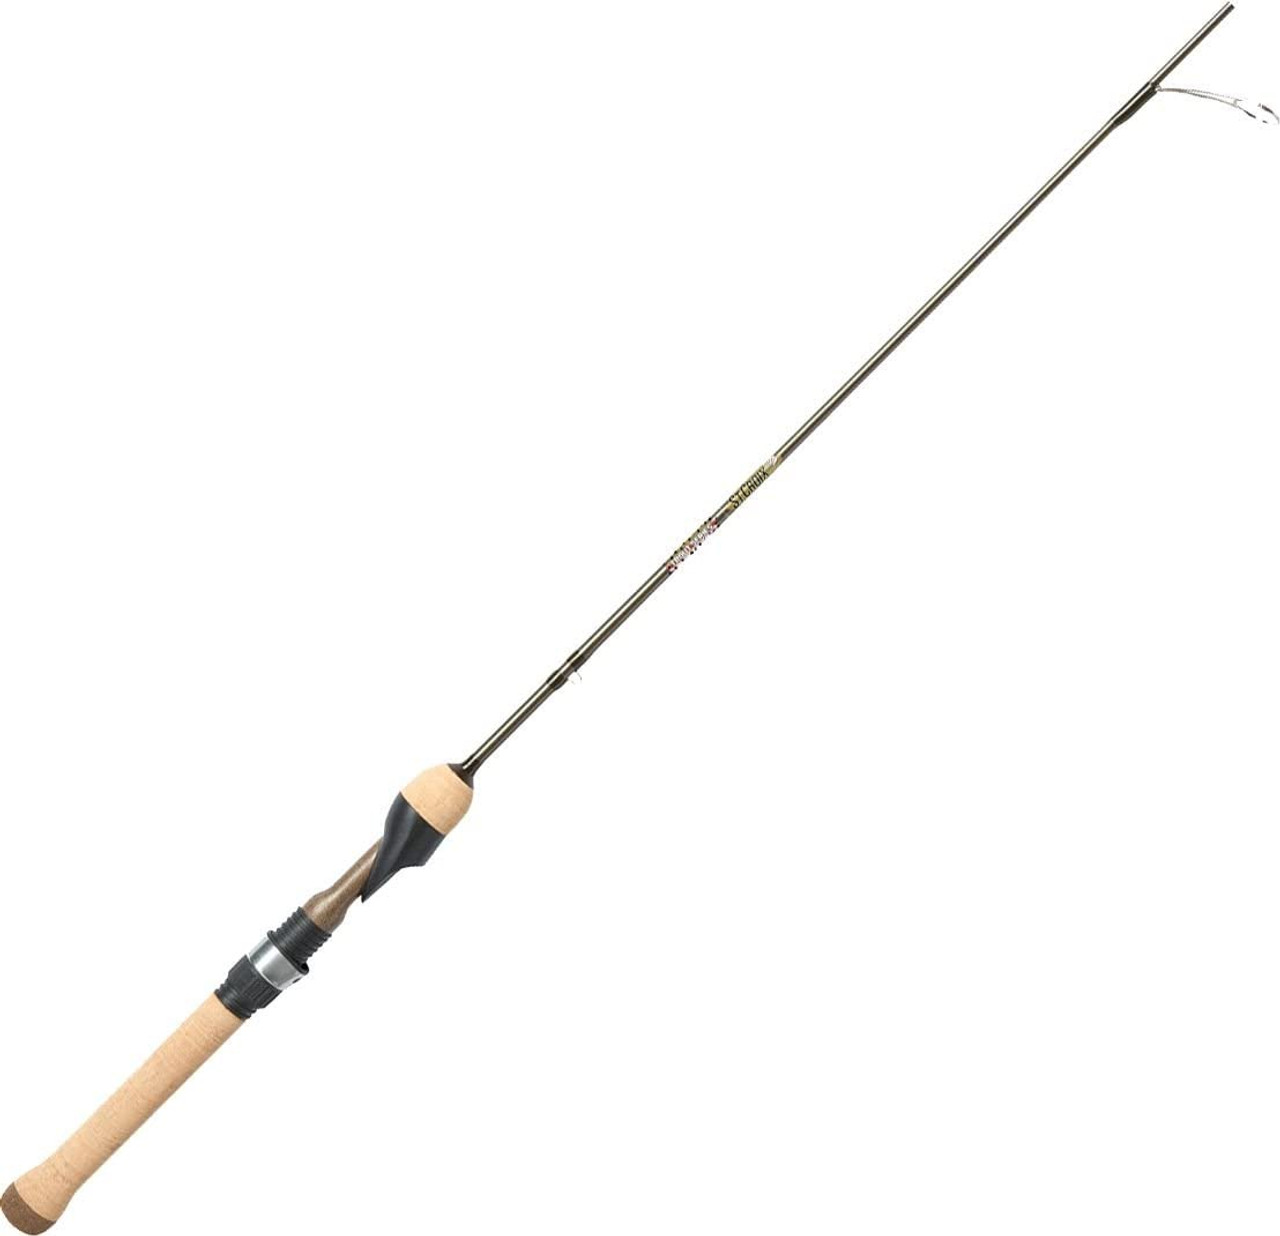 South Bend Infiniti trout fishing rod (lot#16694)